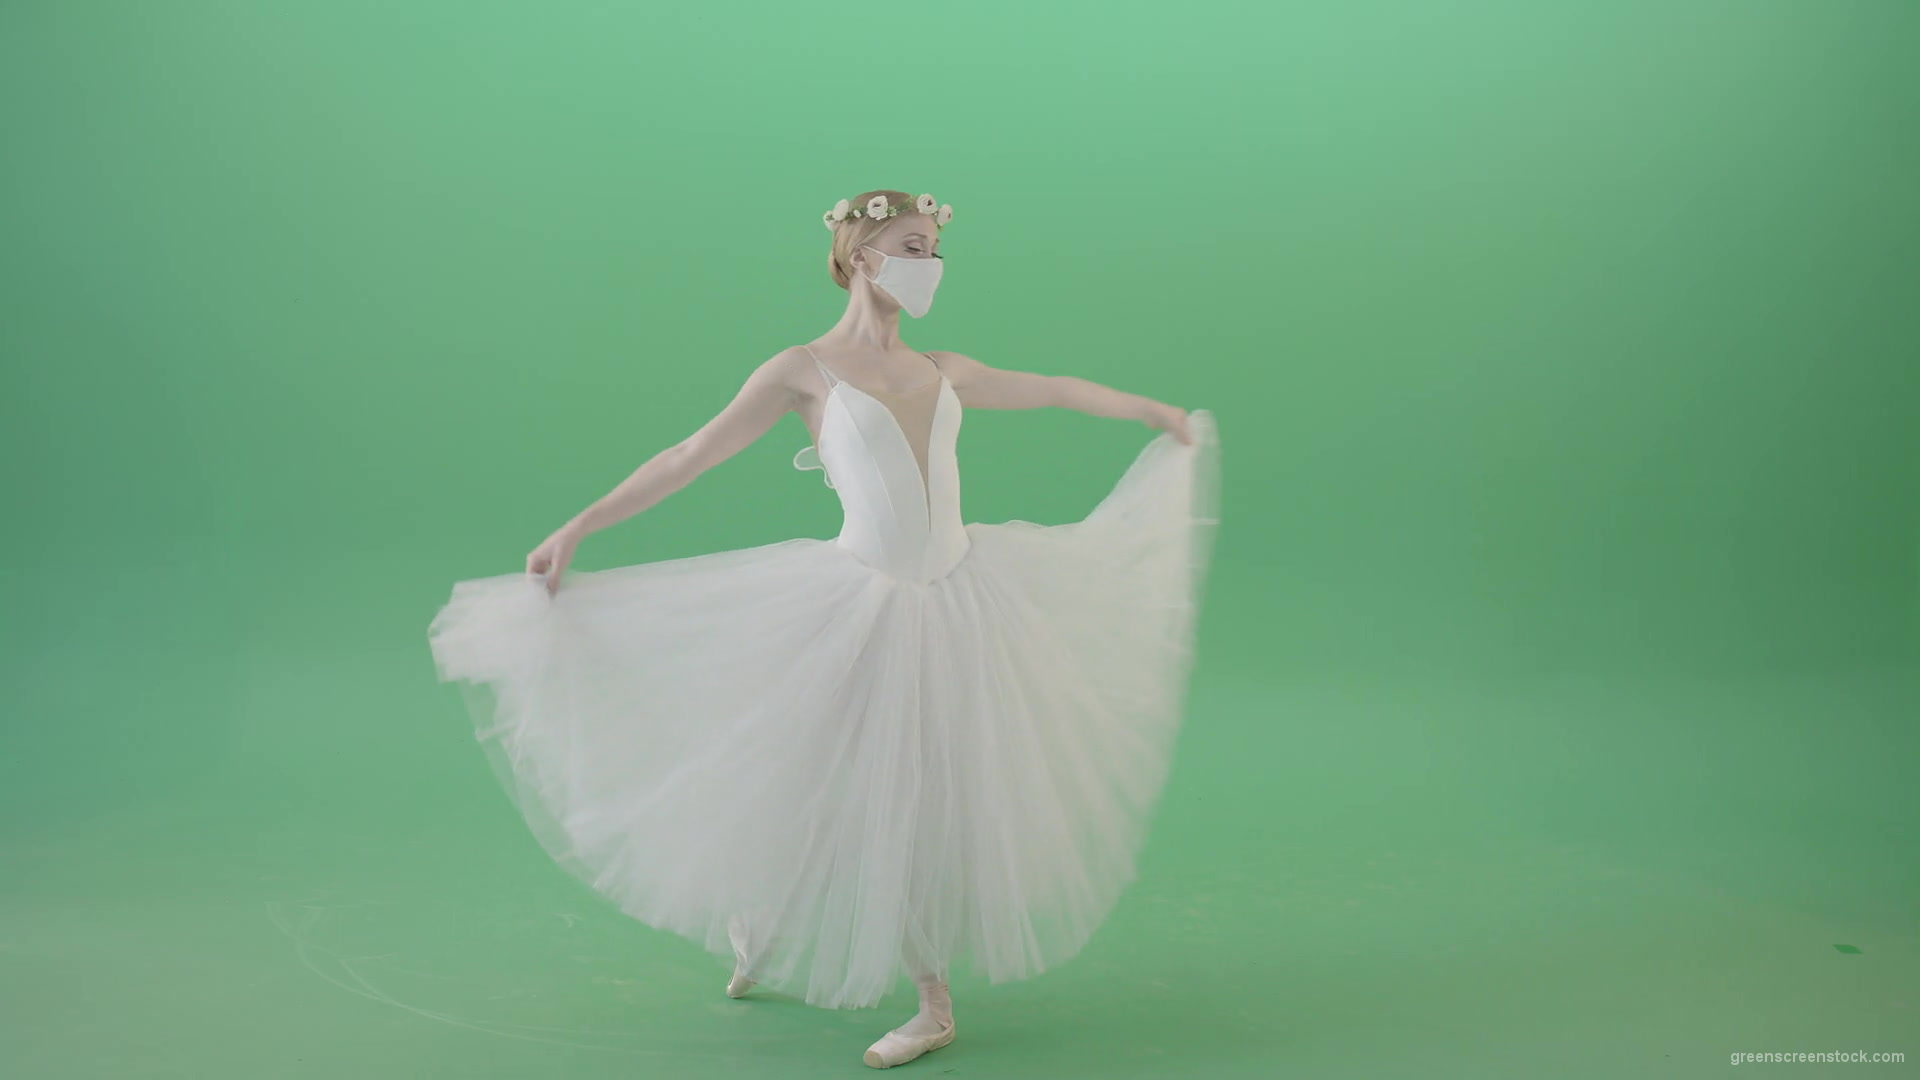 Ballet-Dancing-Girl-in-Corona-Virus-Mask-spinning-on-green-screen-4K-Video-Footage-1920_009 Green Screen Stock